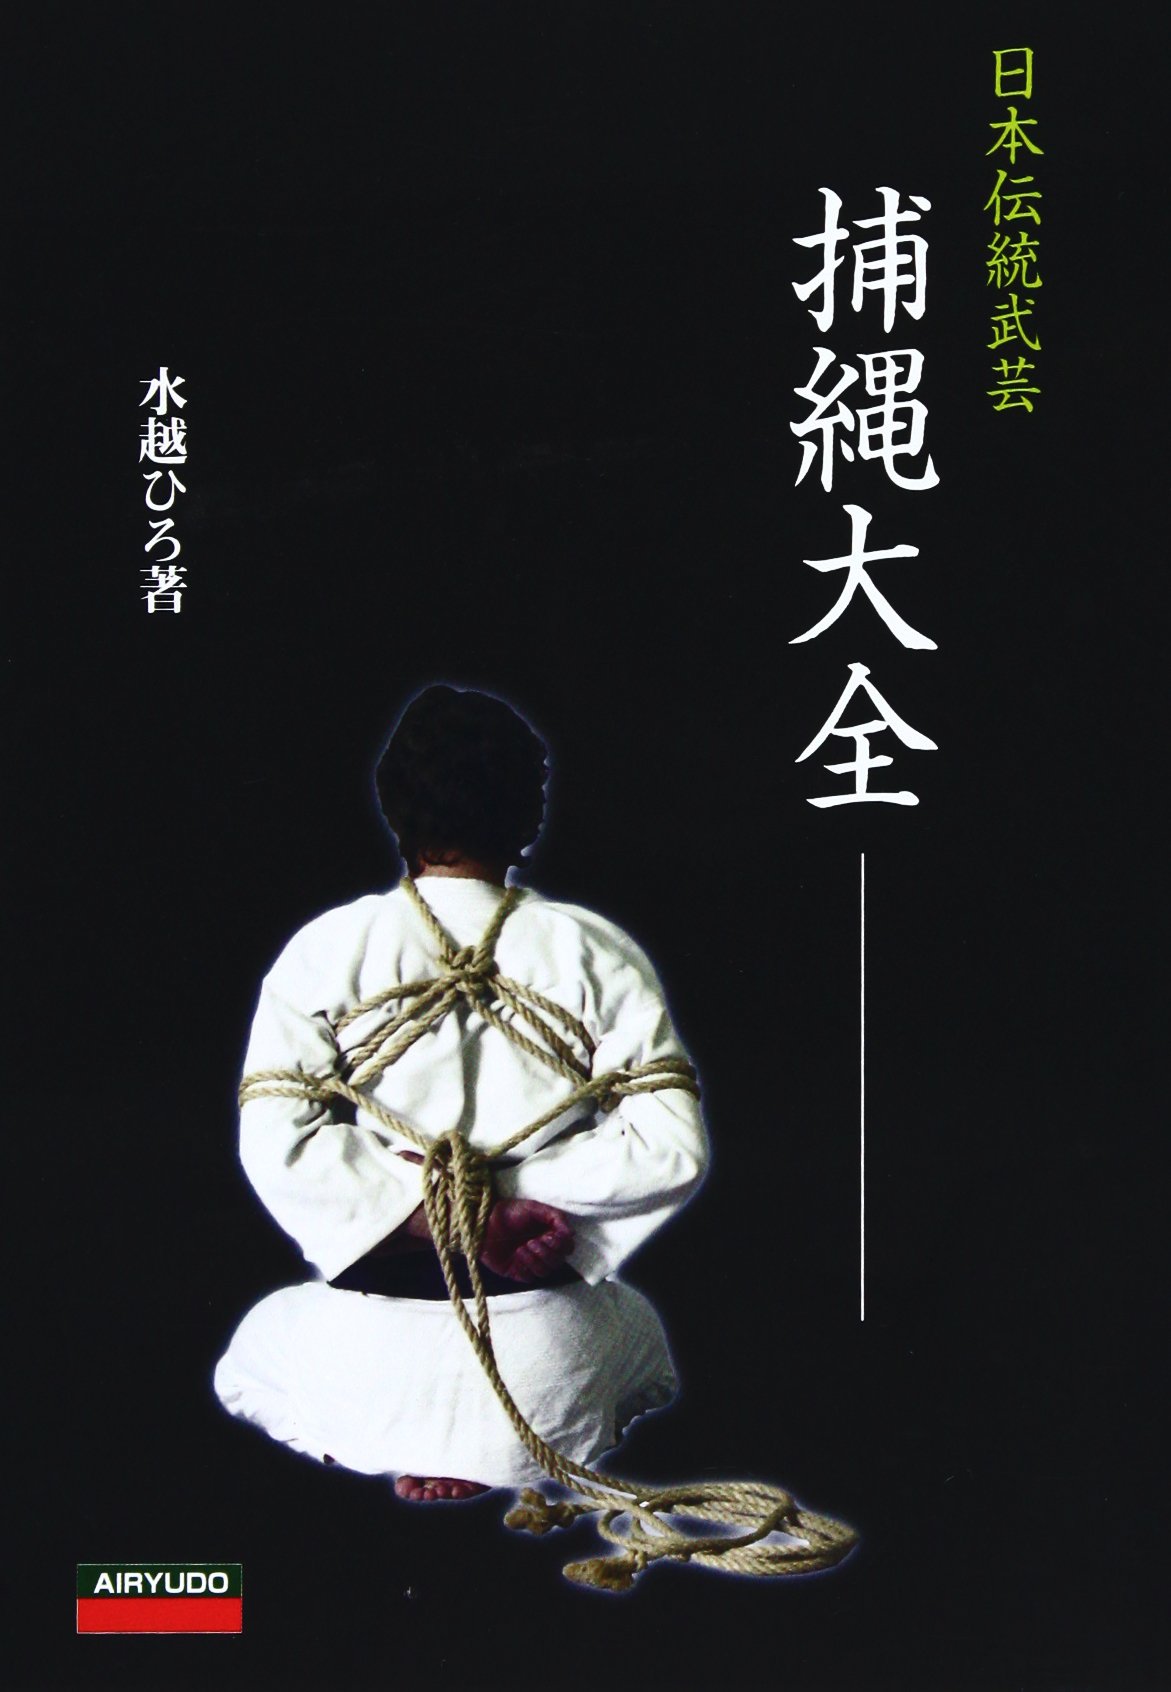 Torinawa Taizen Shibari Rope Tying Book by Hiro Mizukoshi - Budovideos Inc